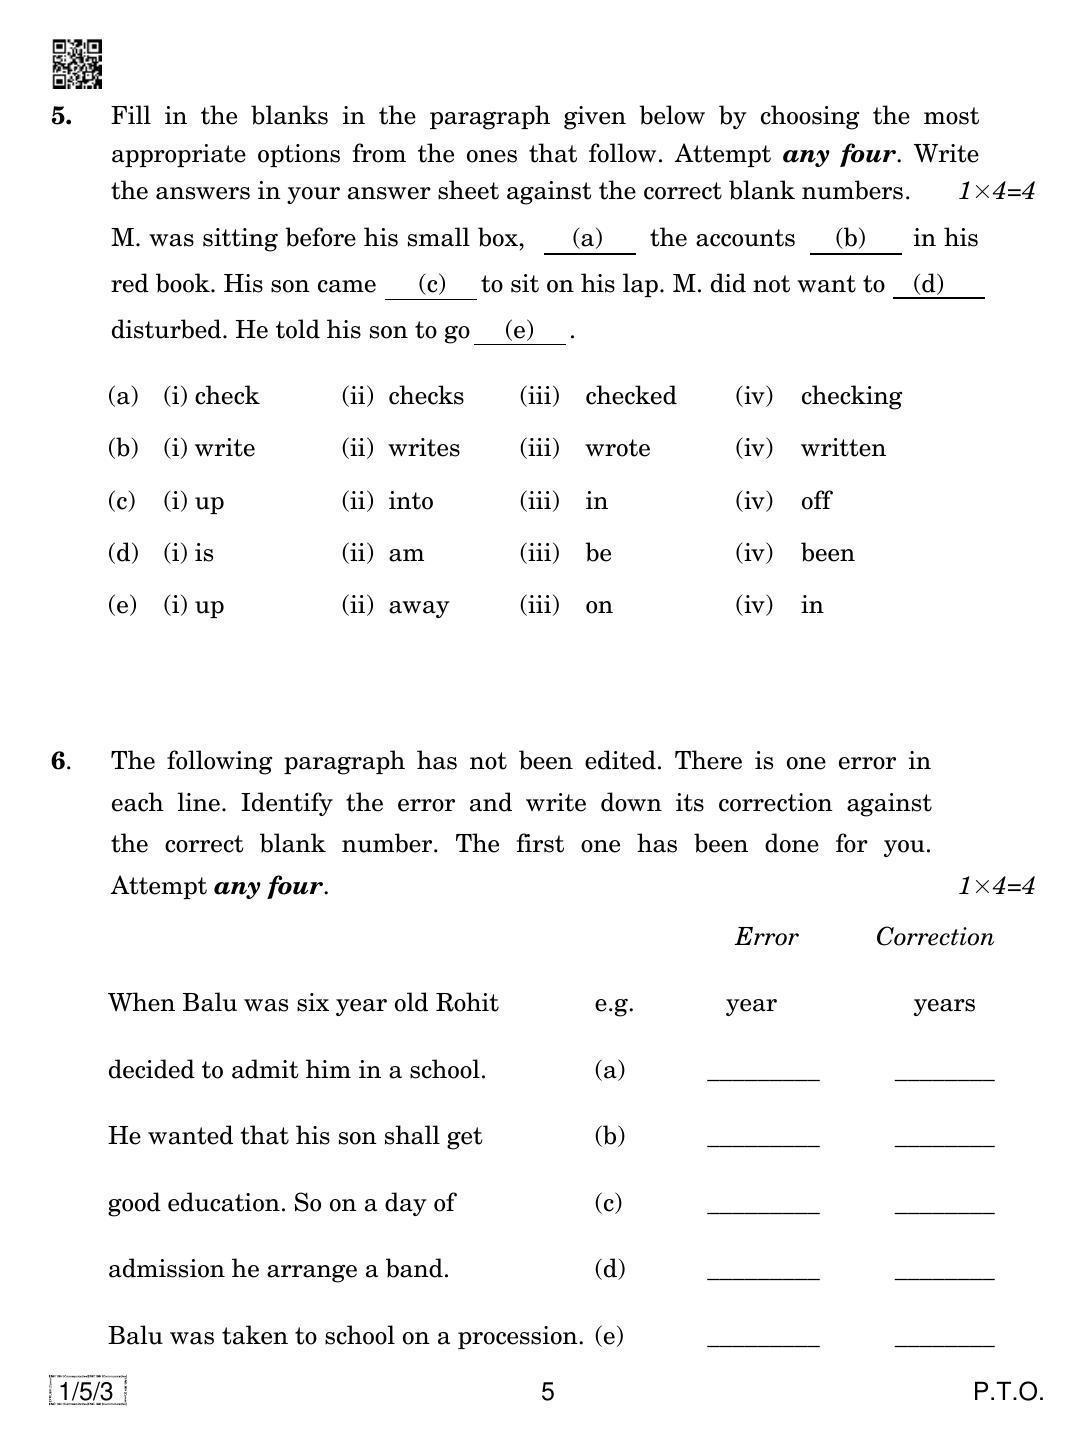 CBSE Class 10 1-5-3 ENGLISH COMMUNICATIVE 2019 Question Paper - Page 5